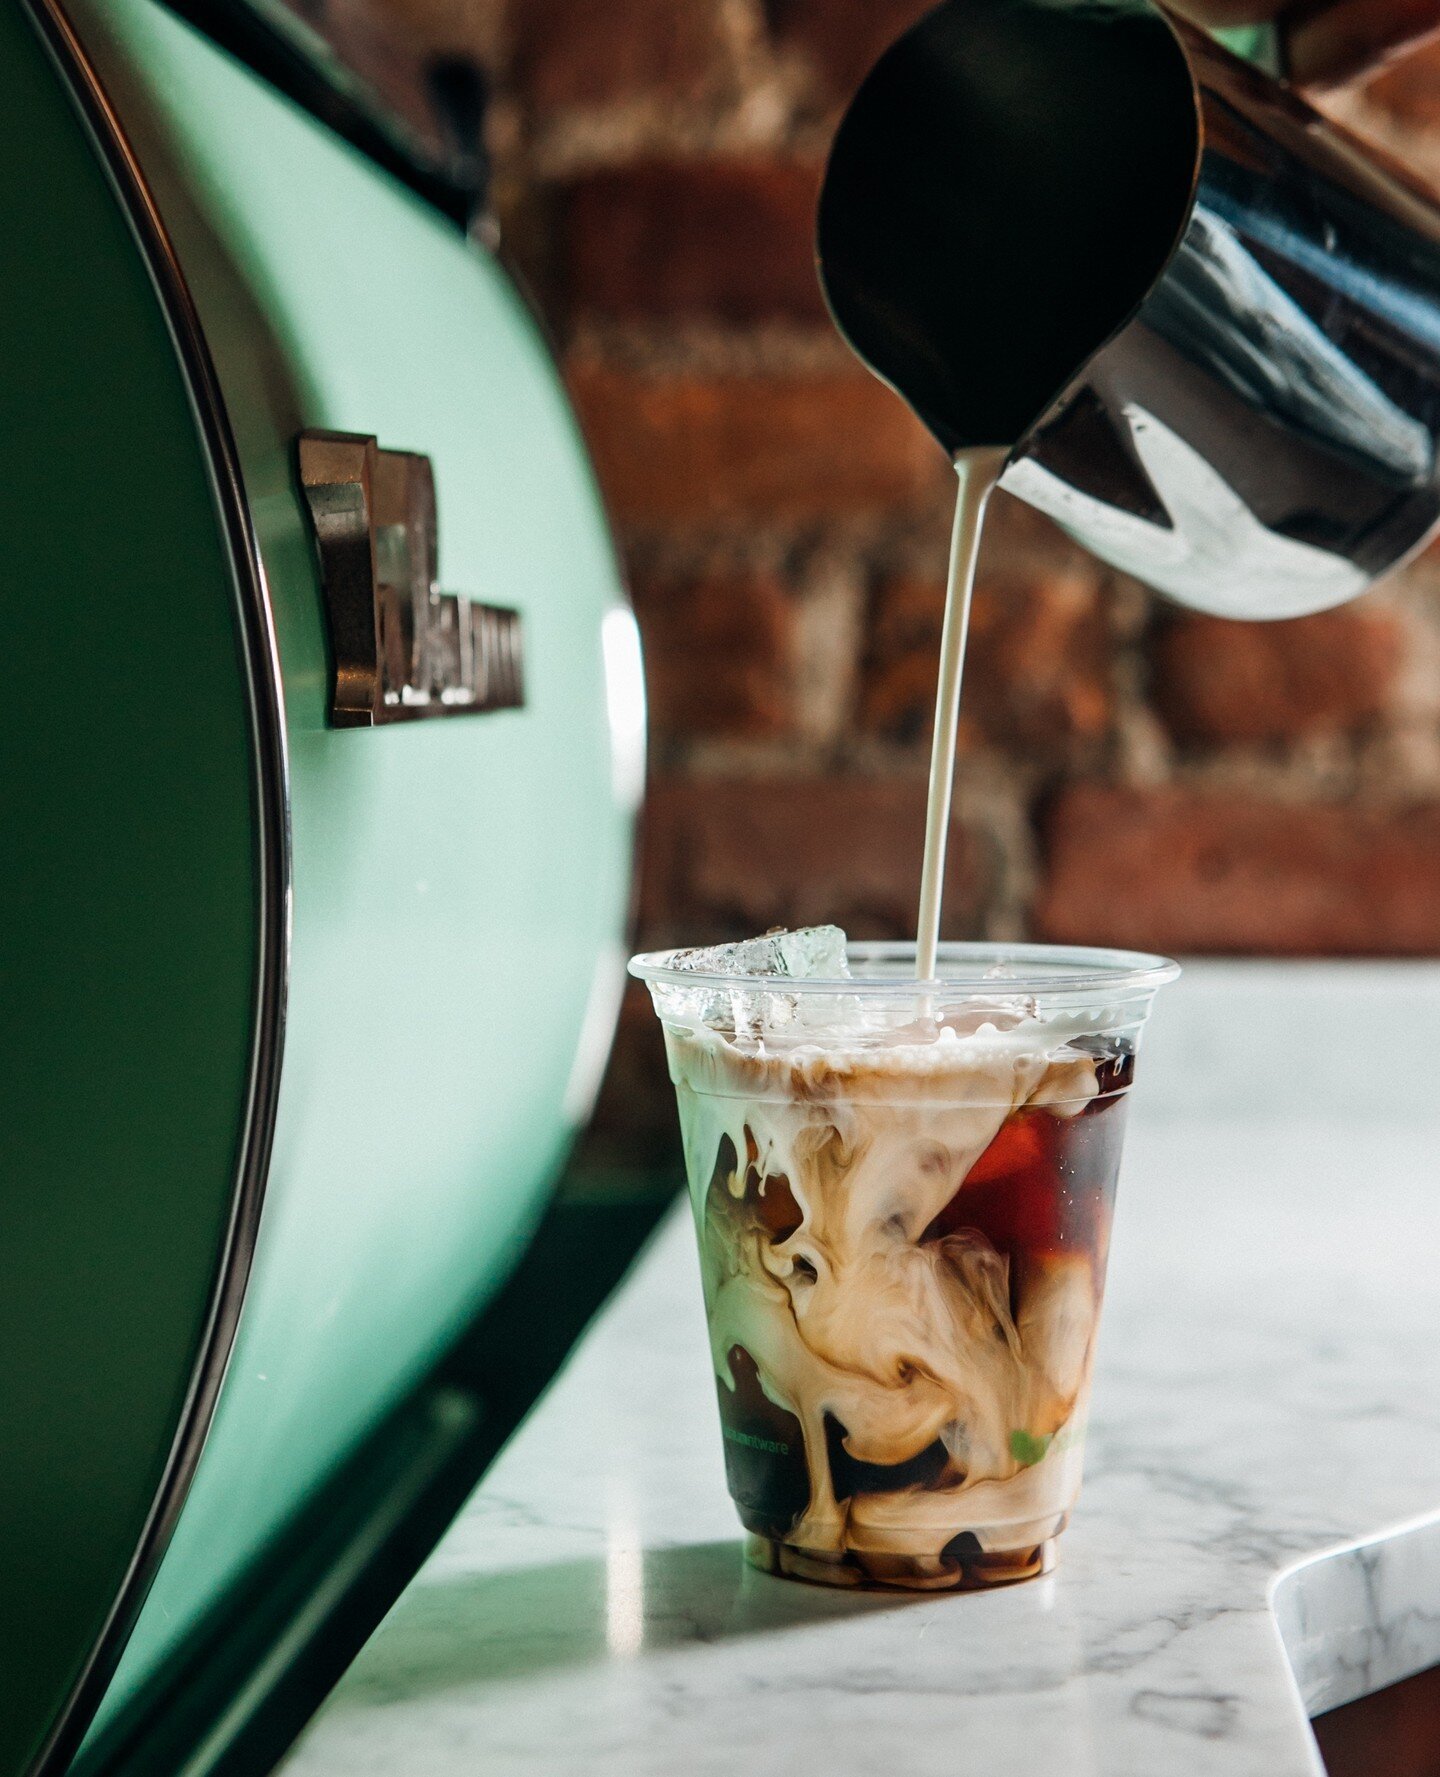 The art of a good pour. ☕️⁠
.⁠
.⁠
.⁠
.⁠
.⁠
.⁠
#coffee #espresso #specialtycoffee #coffeelover #coffeeshop #coffeeaddict #coffeegram #coffeelovers #latte #latteart #coffeetime #coffeeoftheday #coffeeislife #coffeeculture #baristadaily #butfirstcoffee 